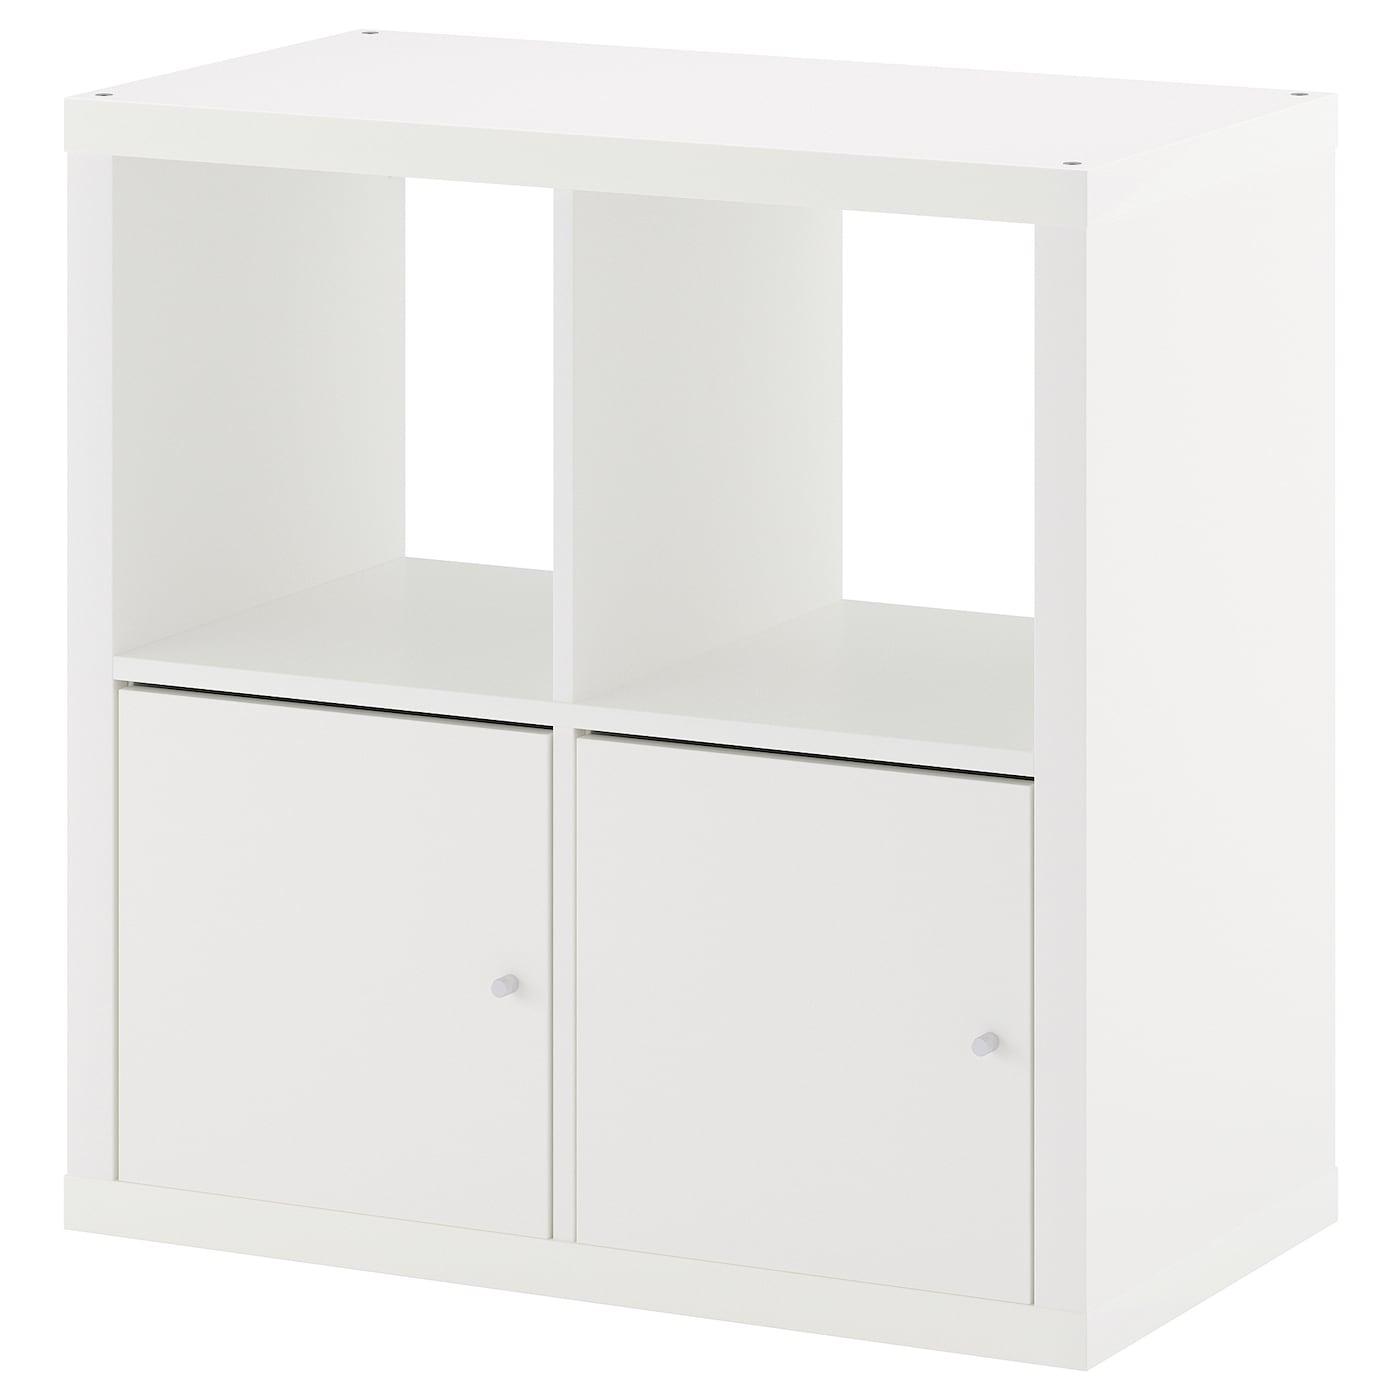 Стеллаж 4 ячейки с дверцами - IKEA KALLAX, 77х77 см, белый, КАЛЛАКС ИКЕА